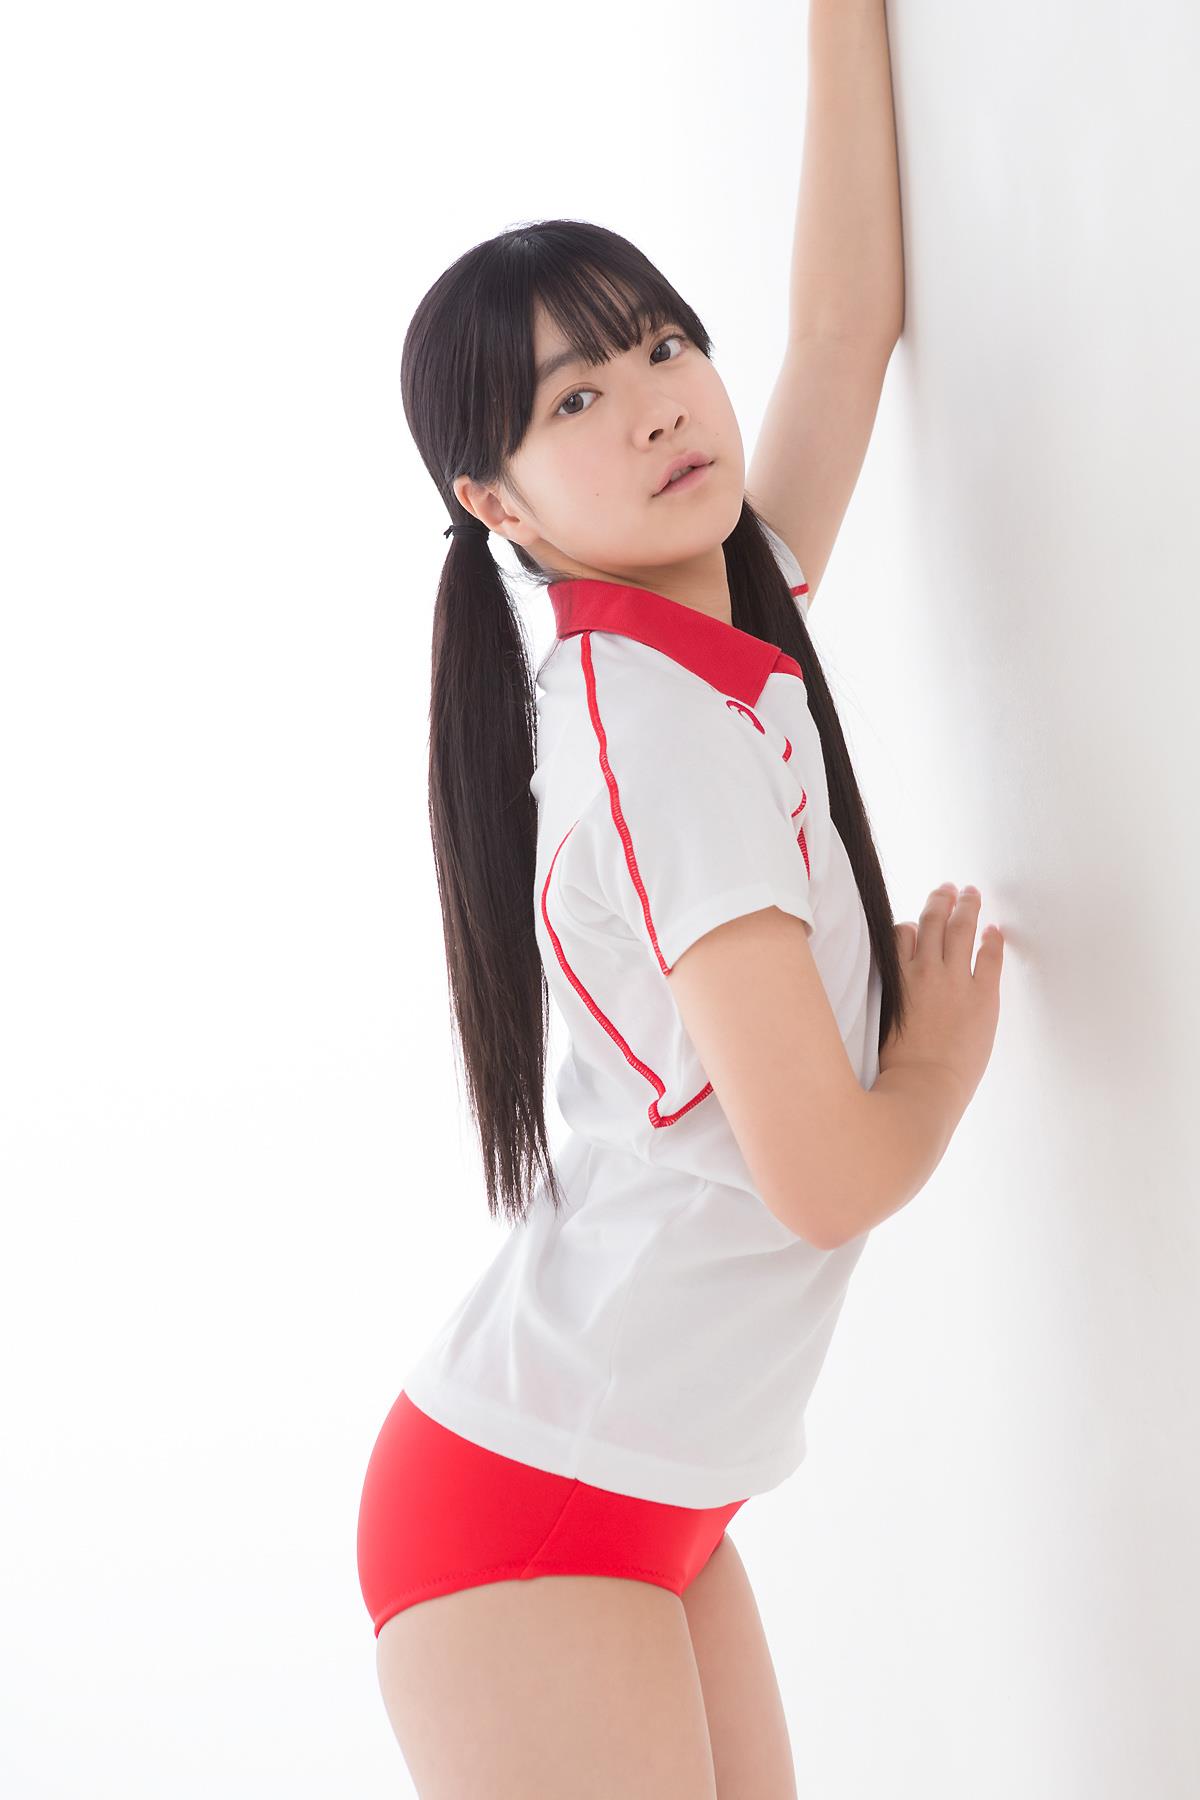 Minisuka.tv Saria Natsume 夏目咲莉愛 - Premium Gallery 2.1 - 12.jpg